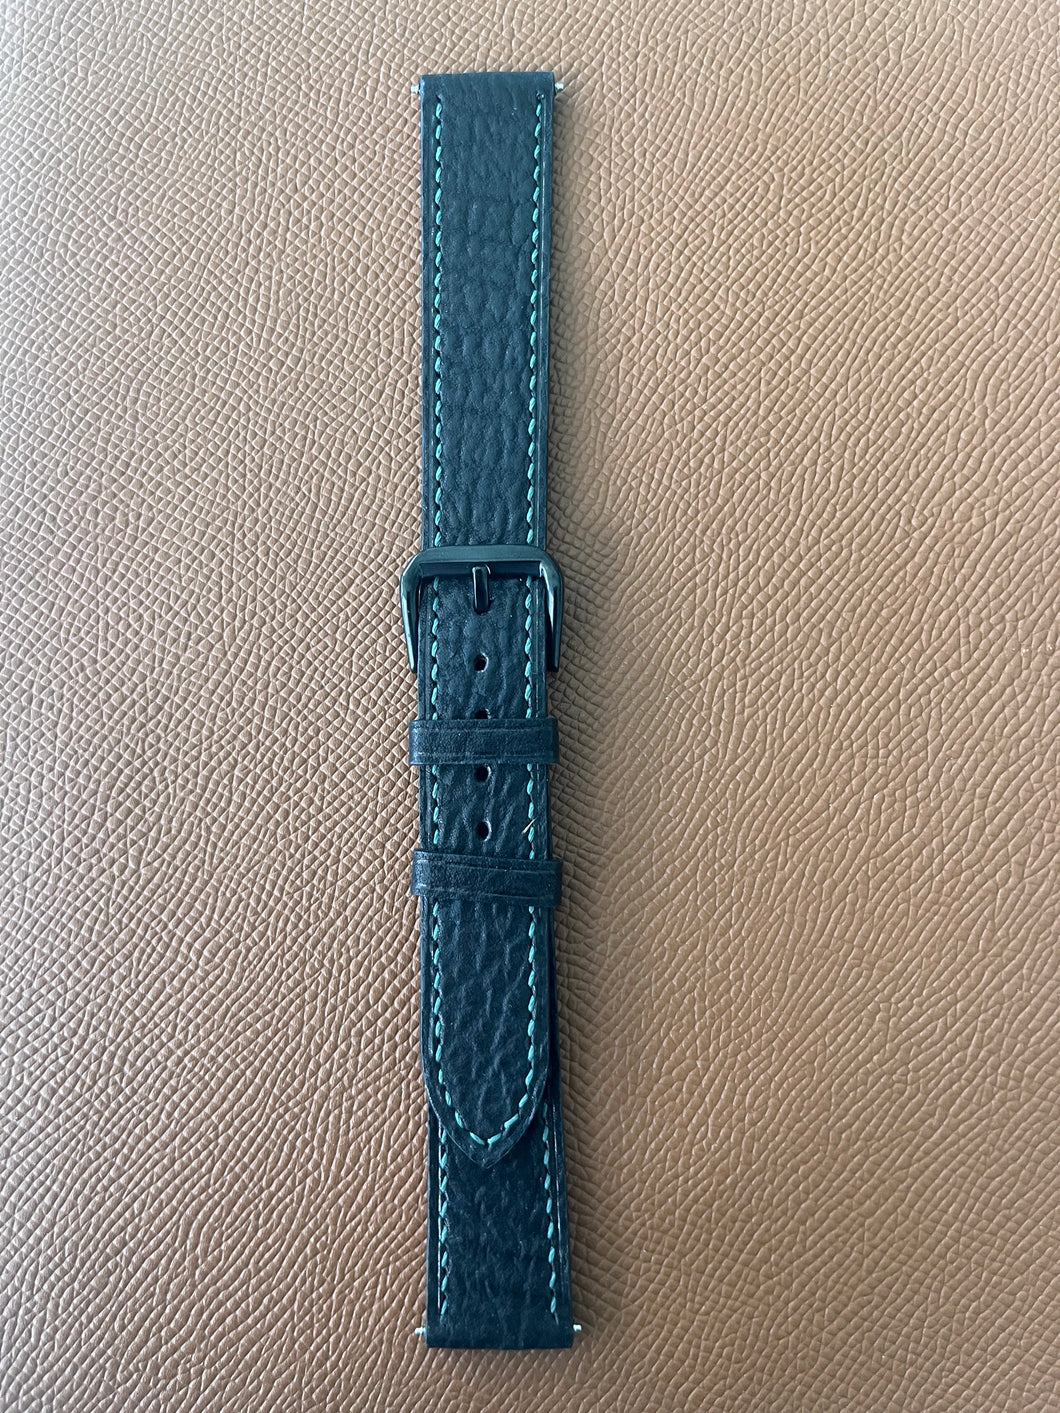 Shark Skin Watch Straps - Black leather-Green stitch - 18mm